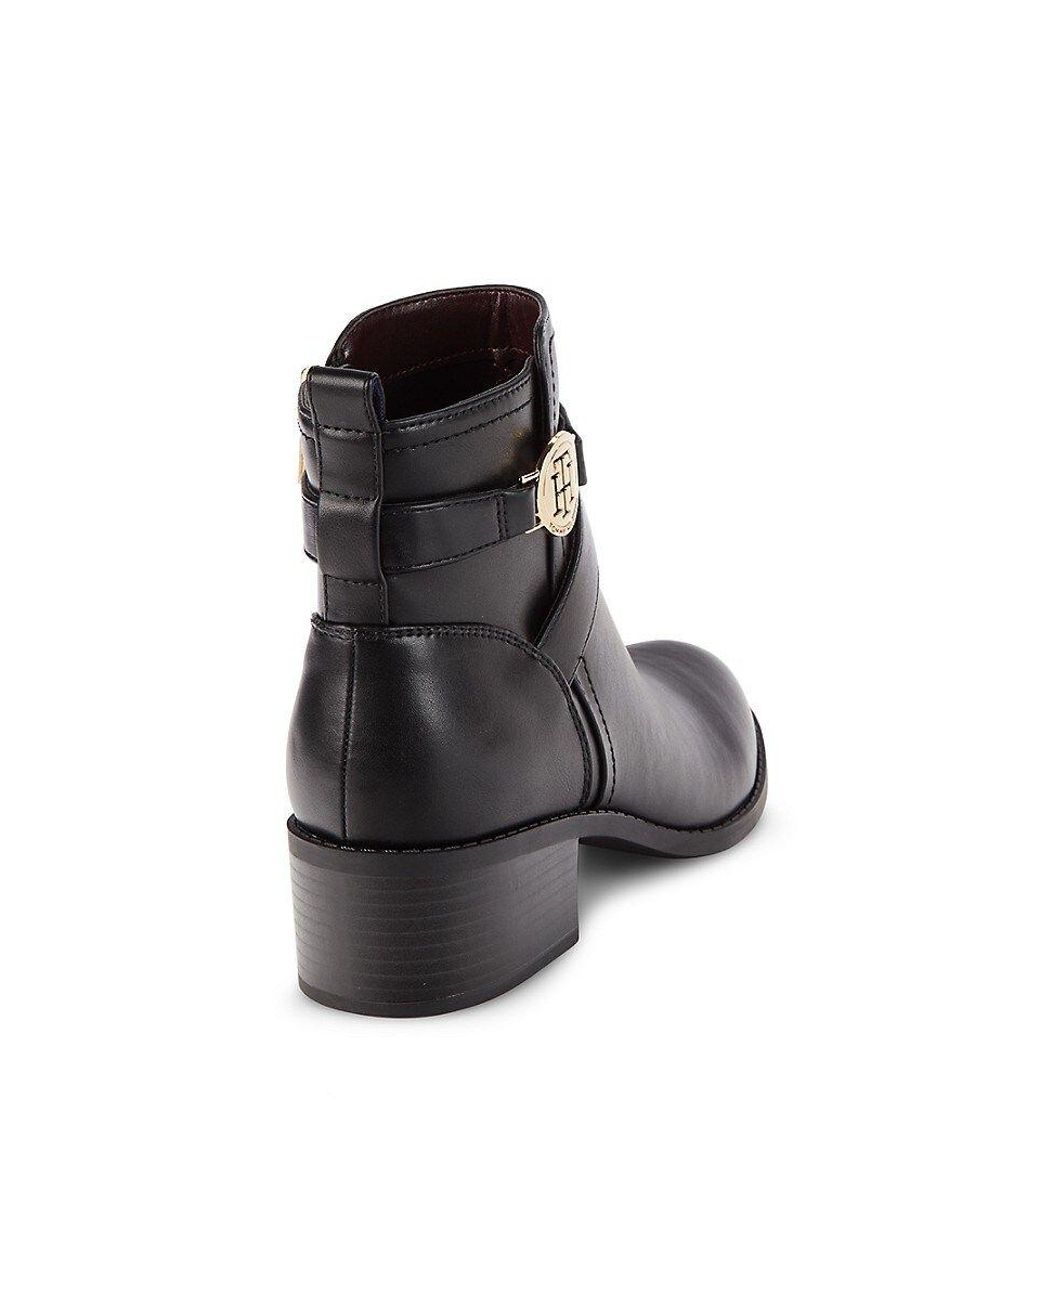 Tommy Hilfiger Diyana Block Heel Ankle Boots in Black | Lyst